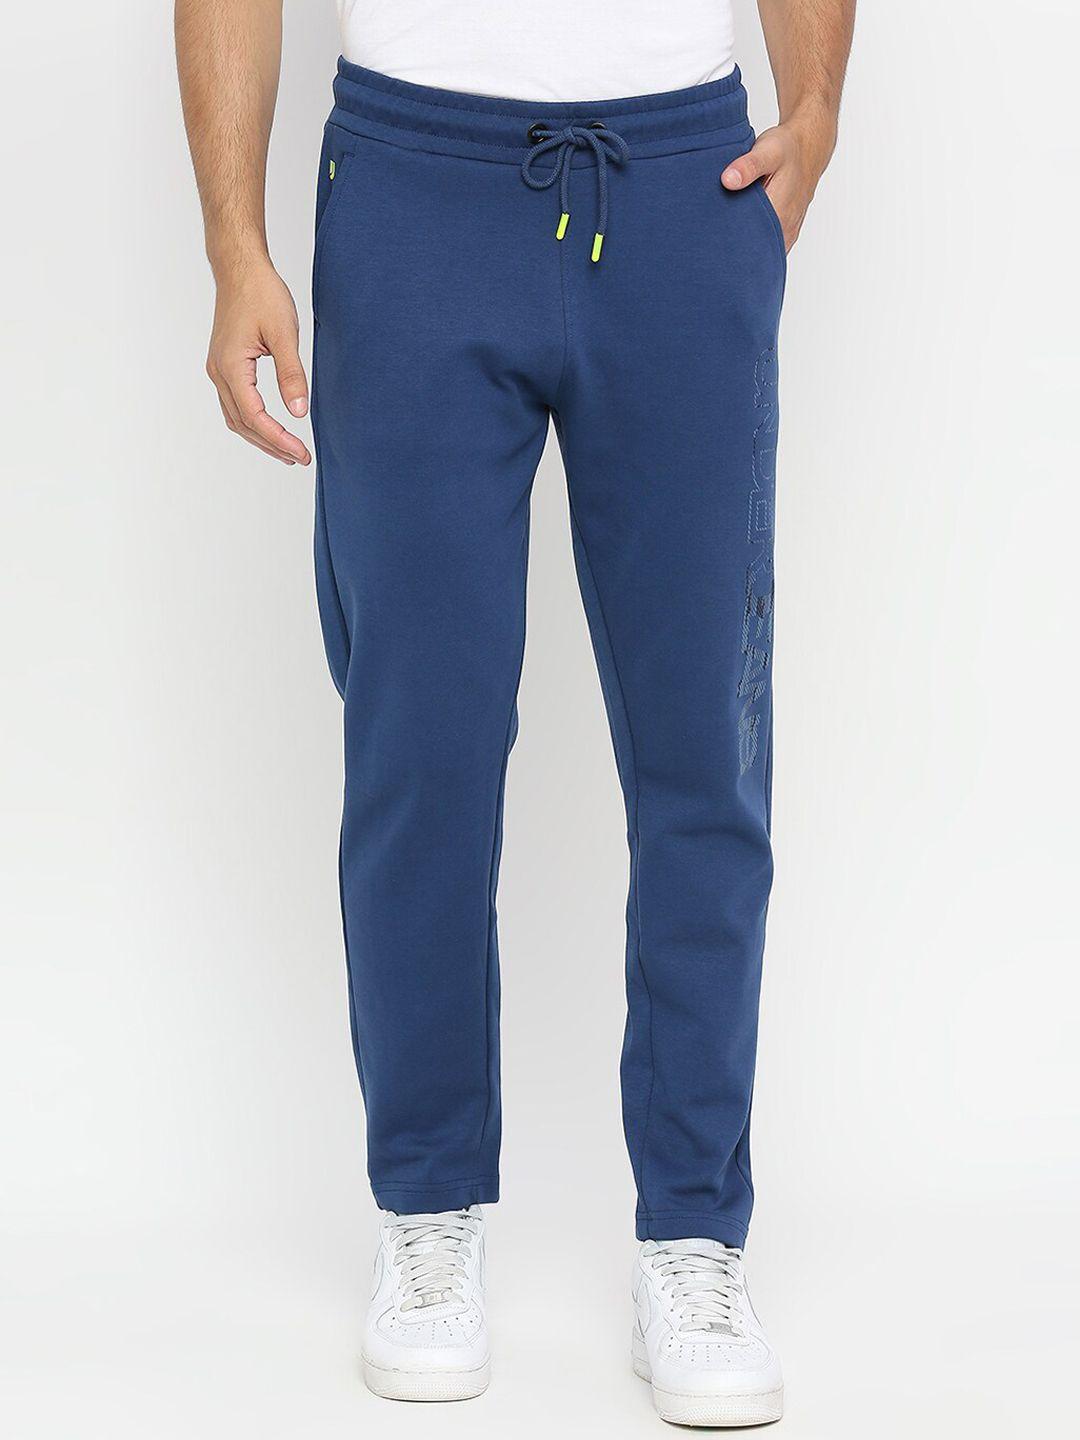 underjeans-by-spykar-men-blue-solid-track-pants